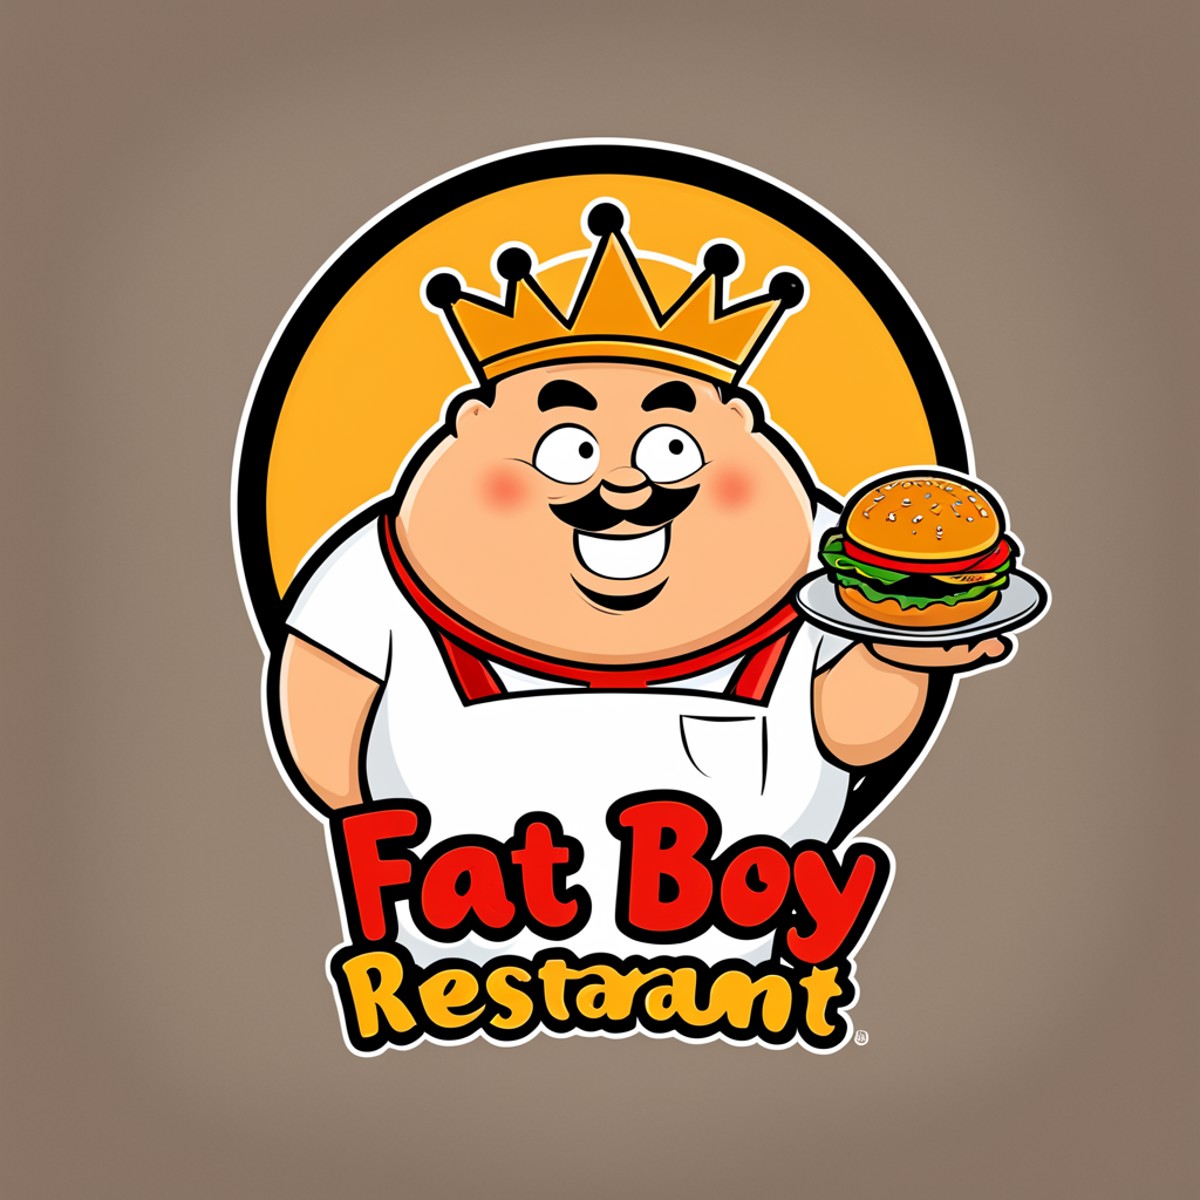 logomkrdsxl, catoon of a fat man witha burger, logo,  vector, text "Fat boy burgers restaurant",  <lora:logomkrdsxl:1>, be...